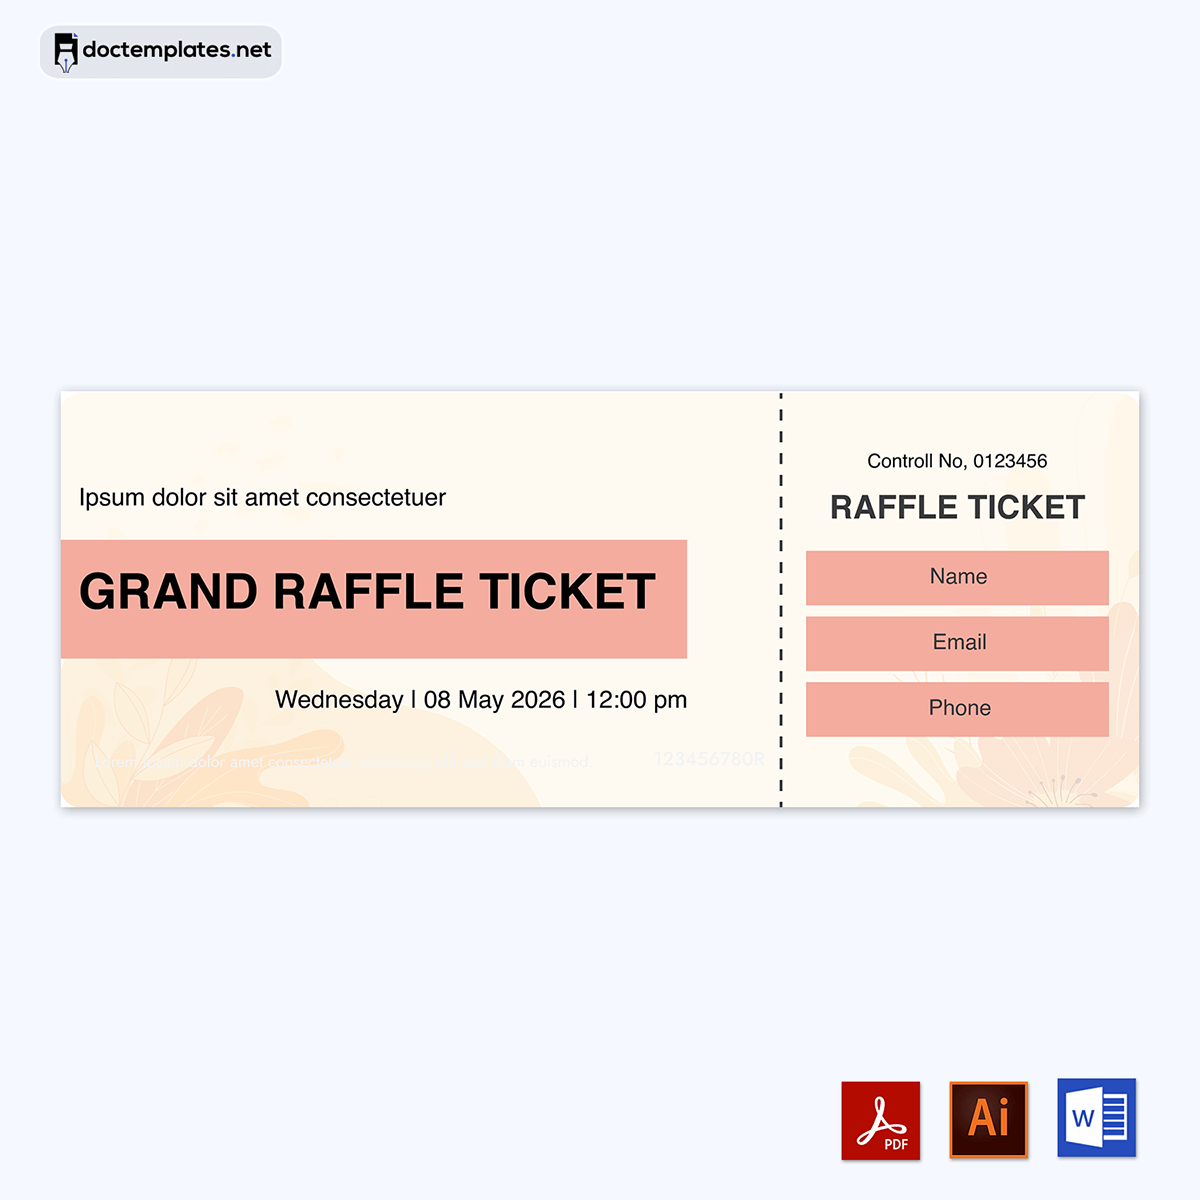 Image of Simple raffle ticket template
Simple raffle ticket template
